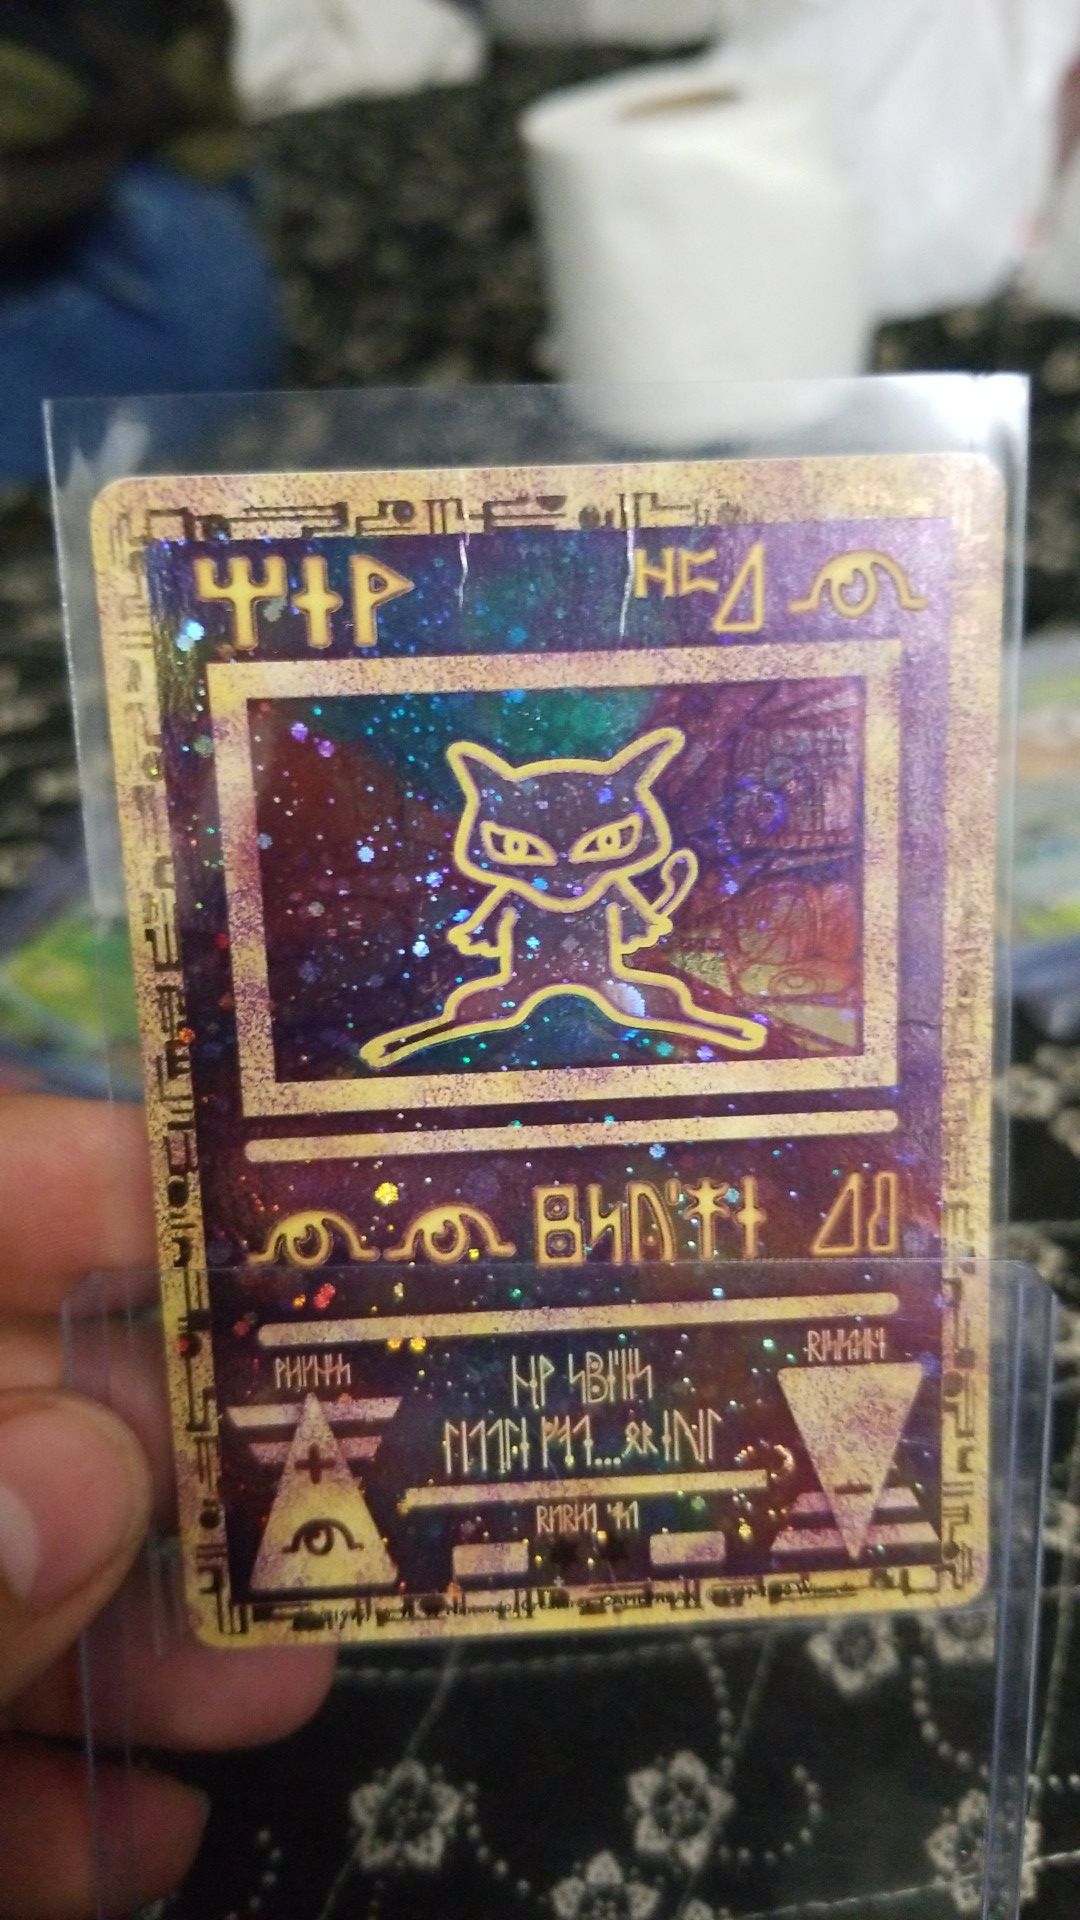 Pokemon cards